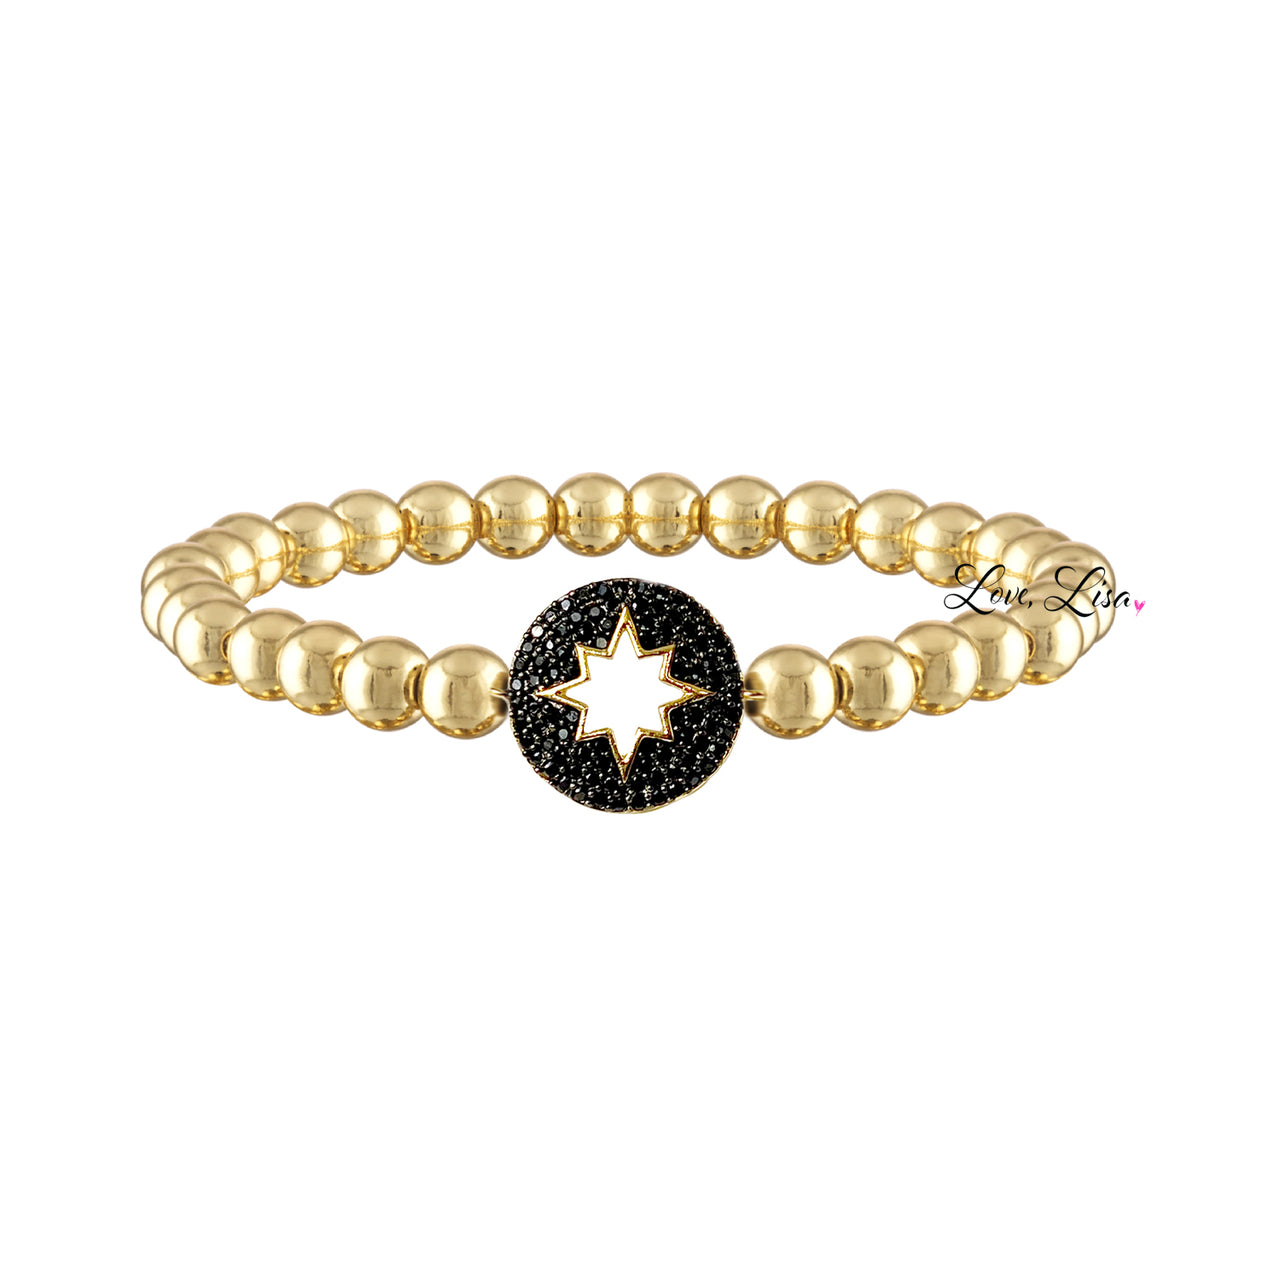 Stunning North Star Bracelet